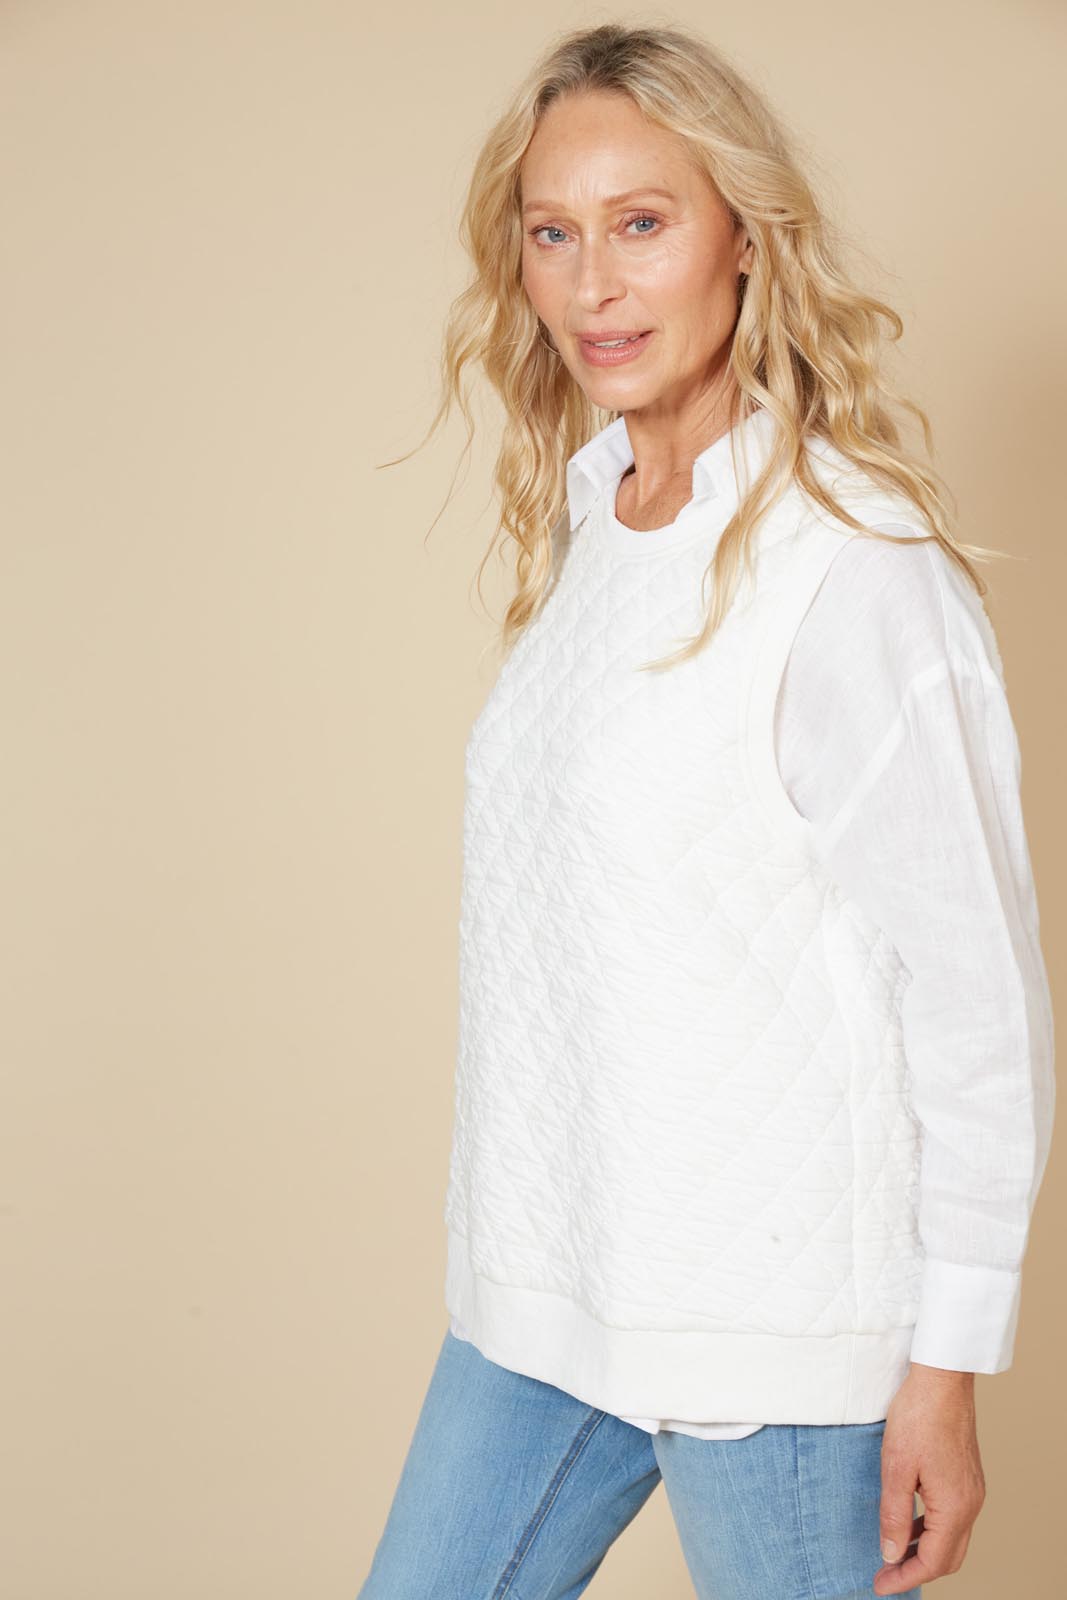 La Vida Vest - Blanc - eb&ive Clothing - Vest